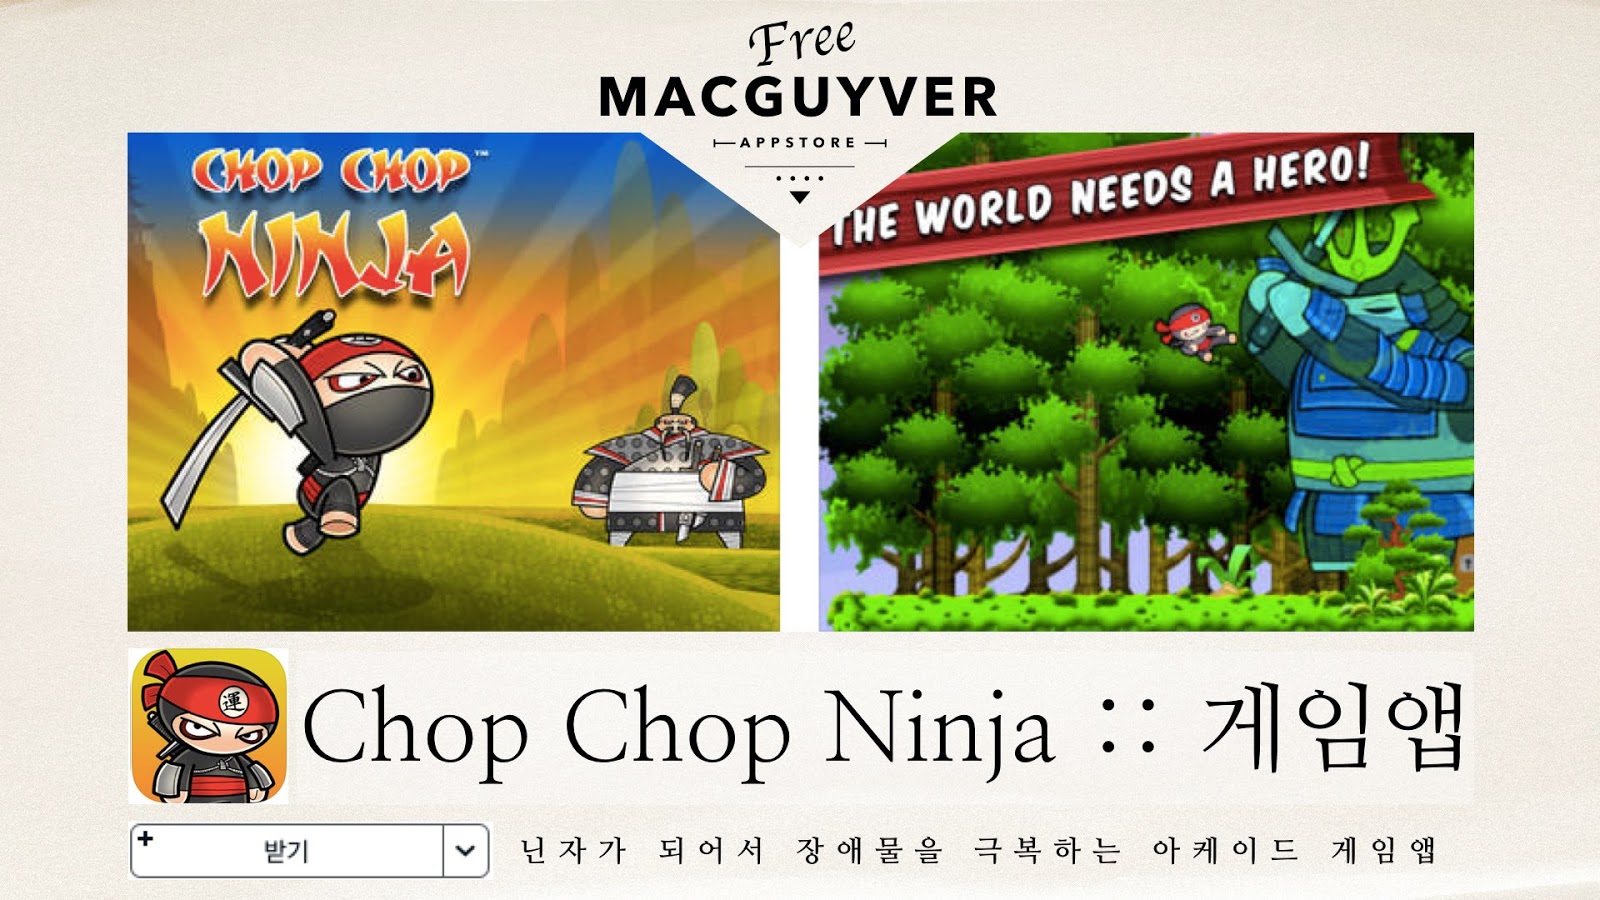 https://itunes.apple.com/kr/app/chop-chop-ninja/id346877580?mt=8